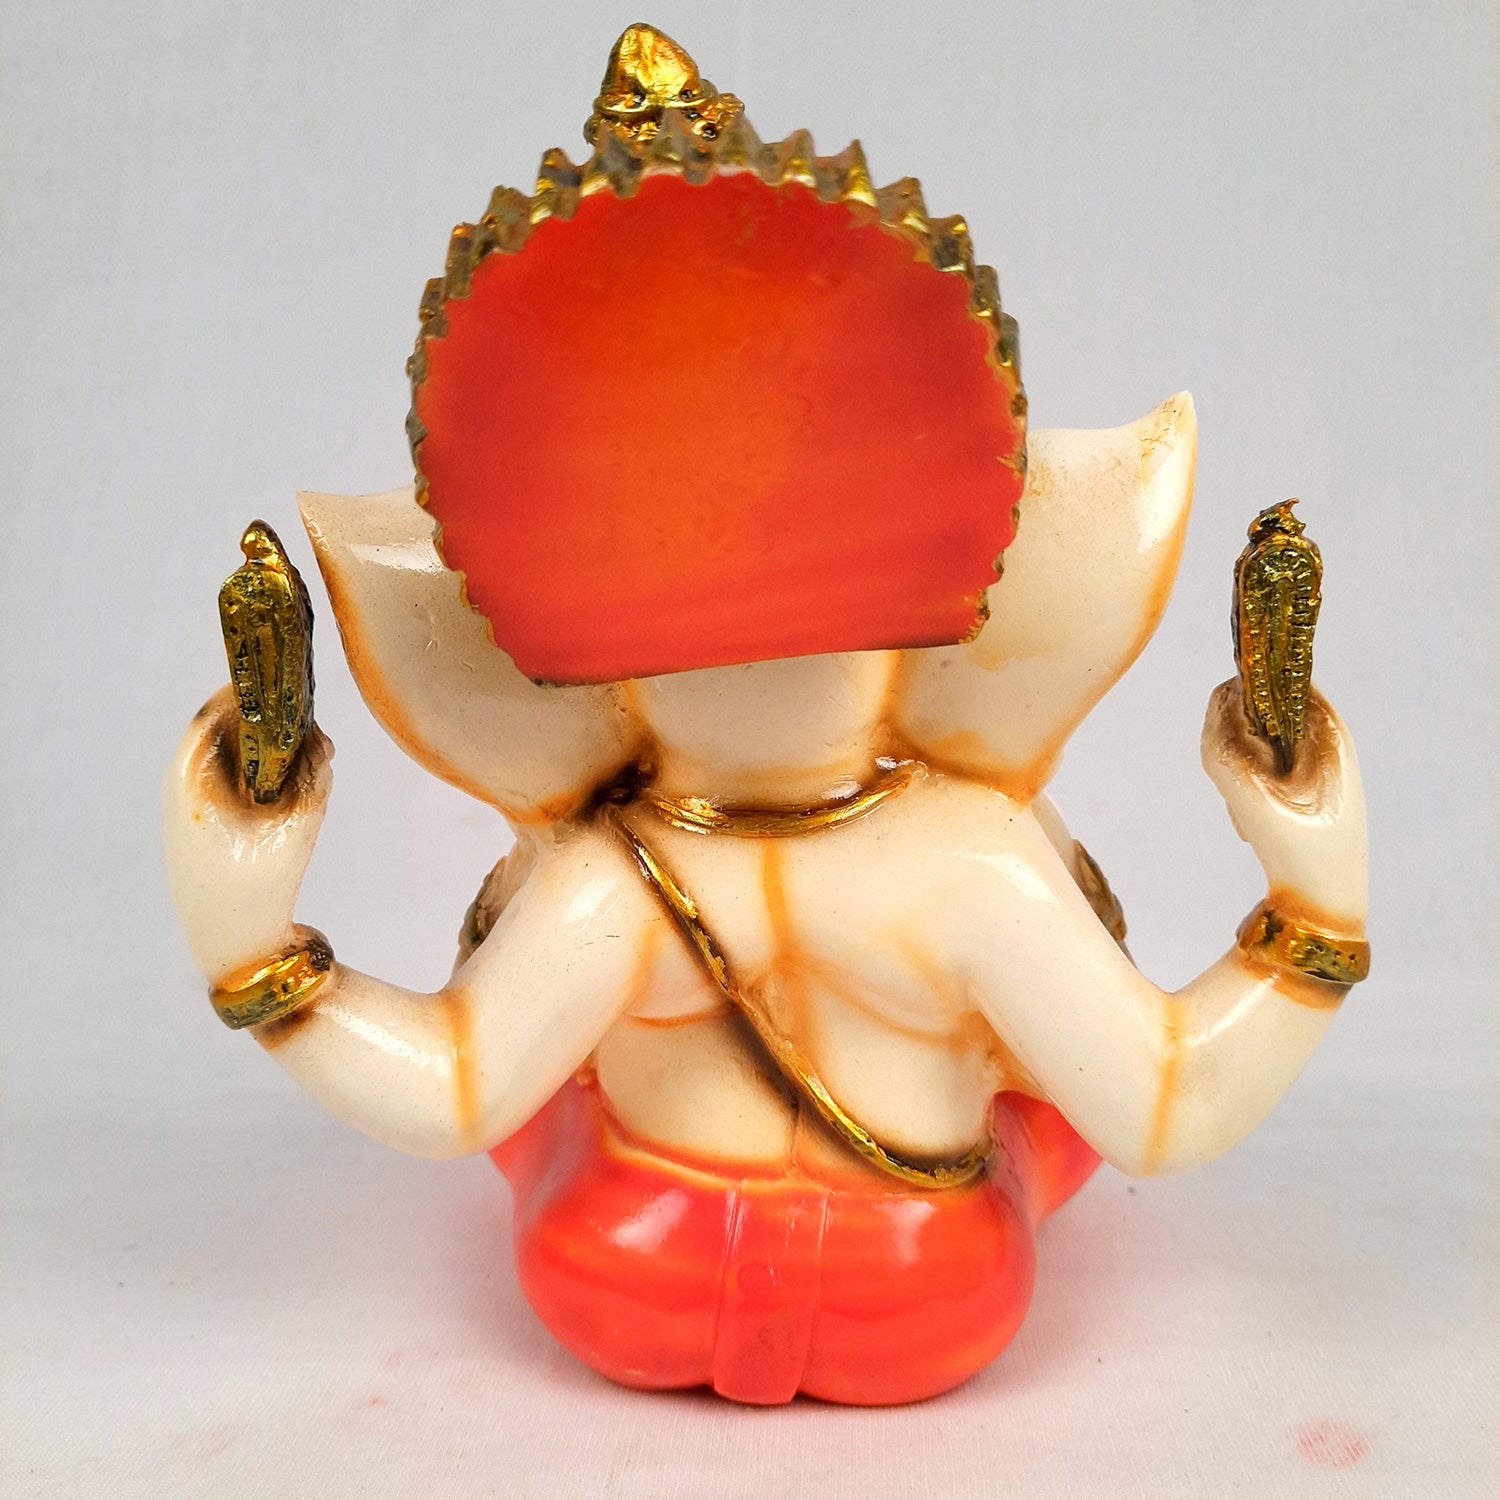 Ganesh Idol | Lord Ganesha Statue Murti - For Puja, Home & Entrance Living Room Decor & Gift - 8 Inch - Apkamart